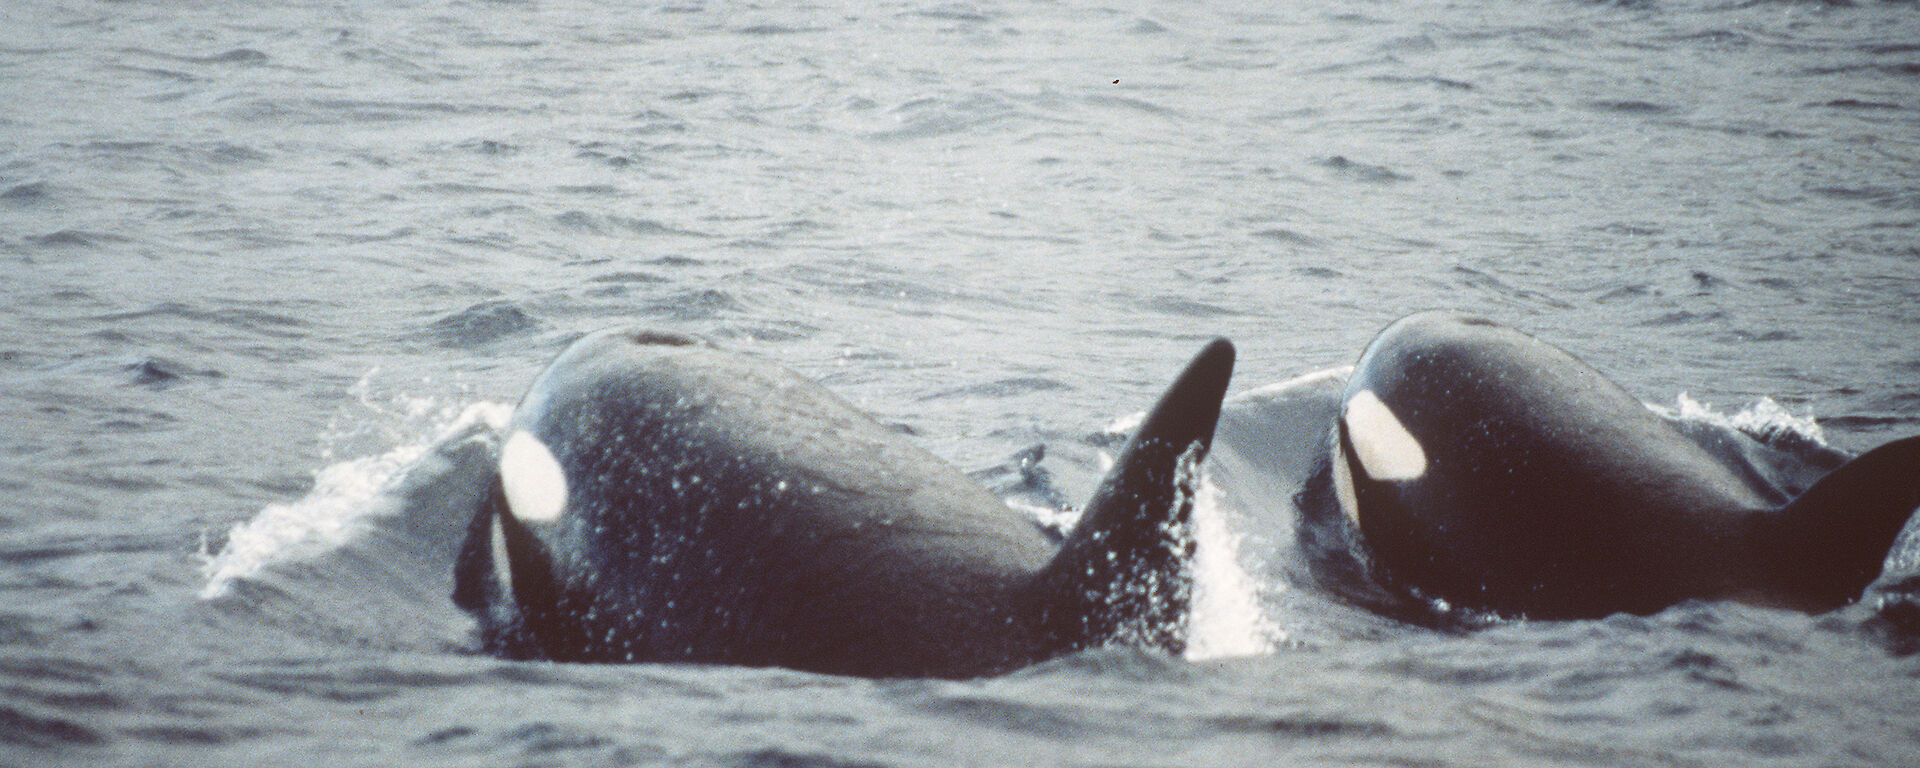 Killer whales in Lusitania Bay